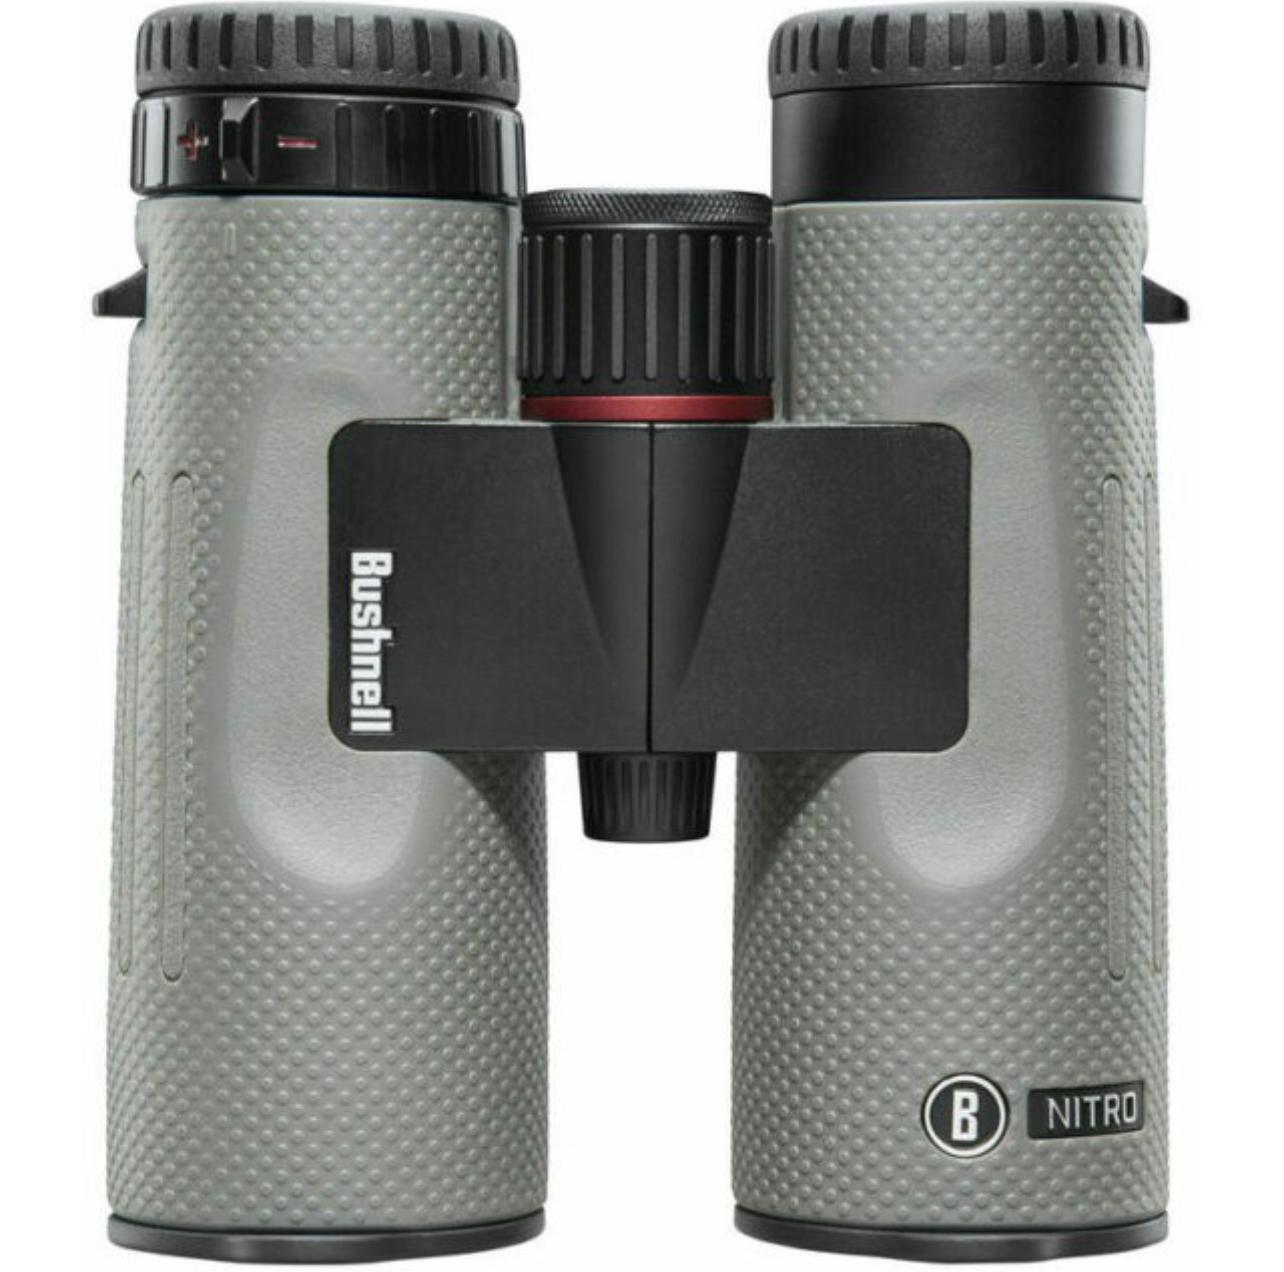 Bushnell Binoculars Nitro 10x42 (BN1042G) - Limited Lifetime Warranty